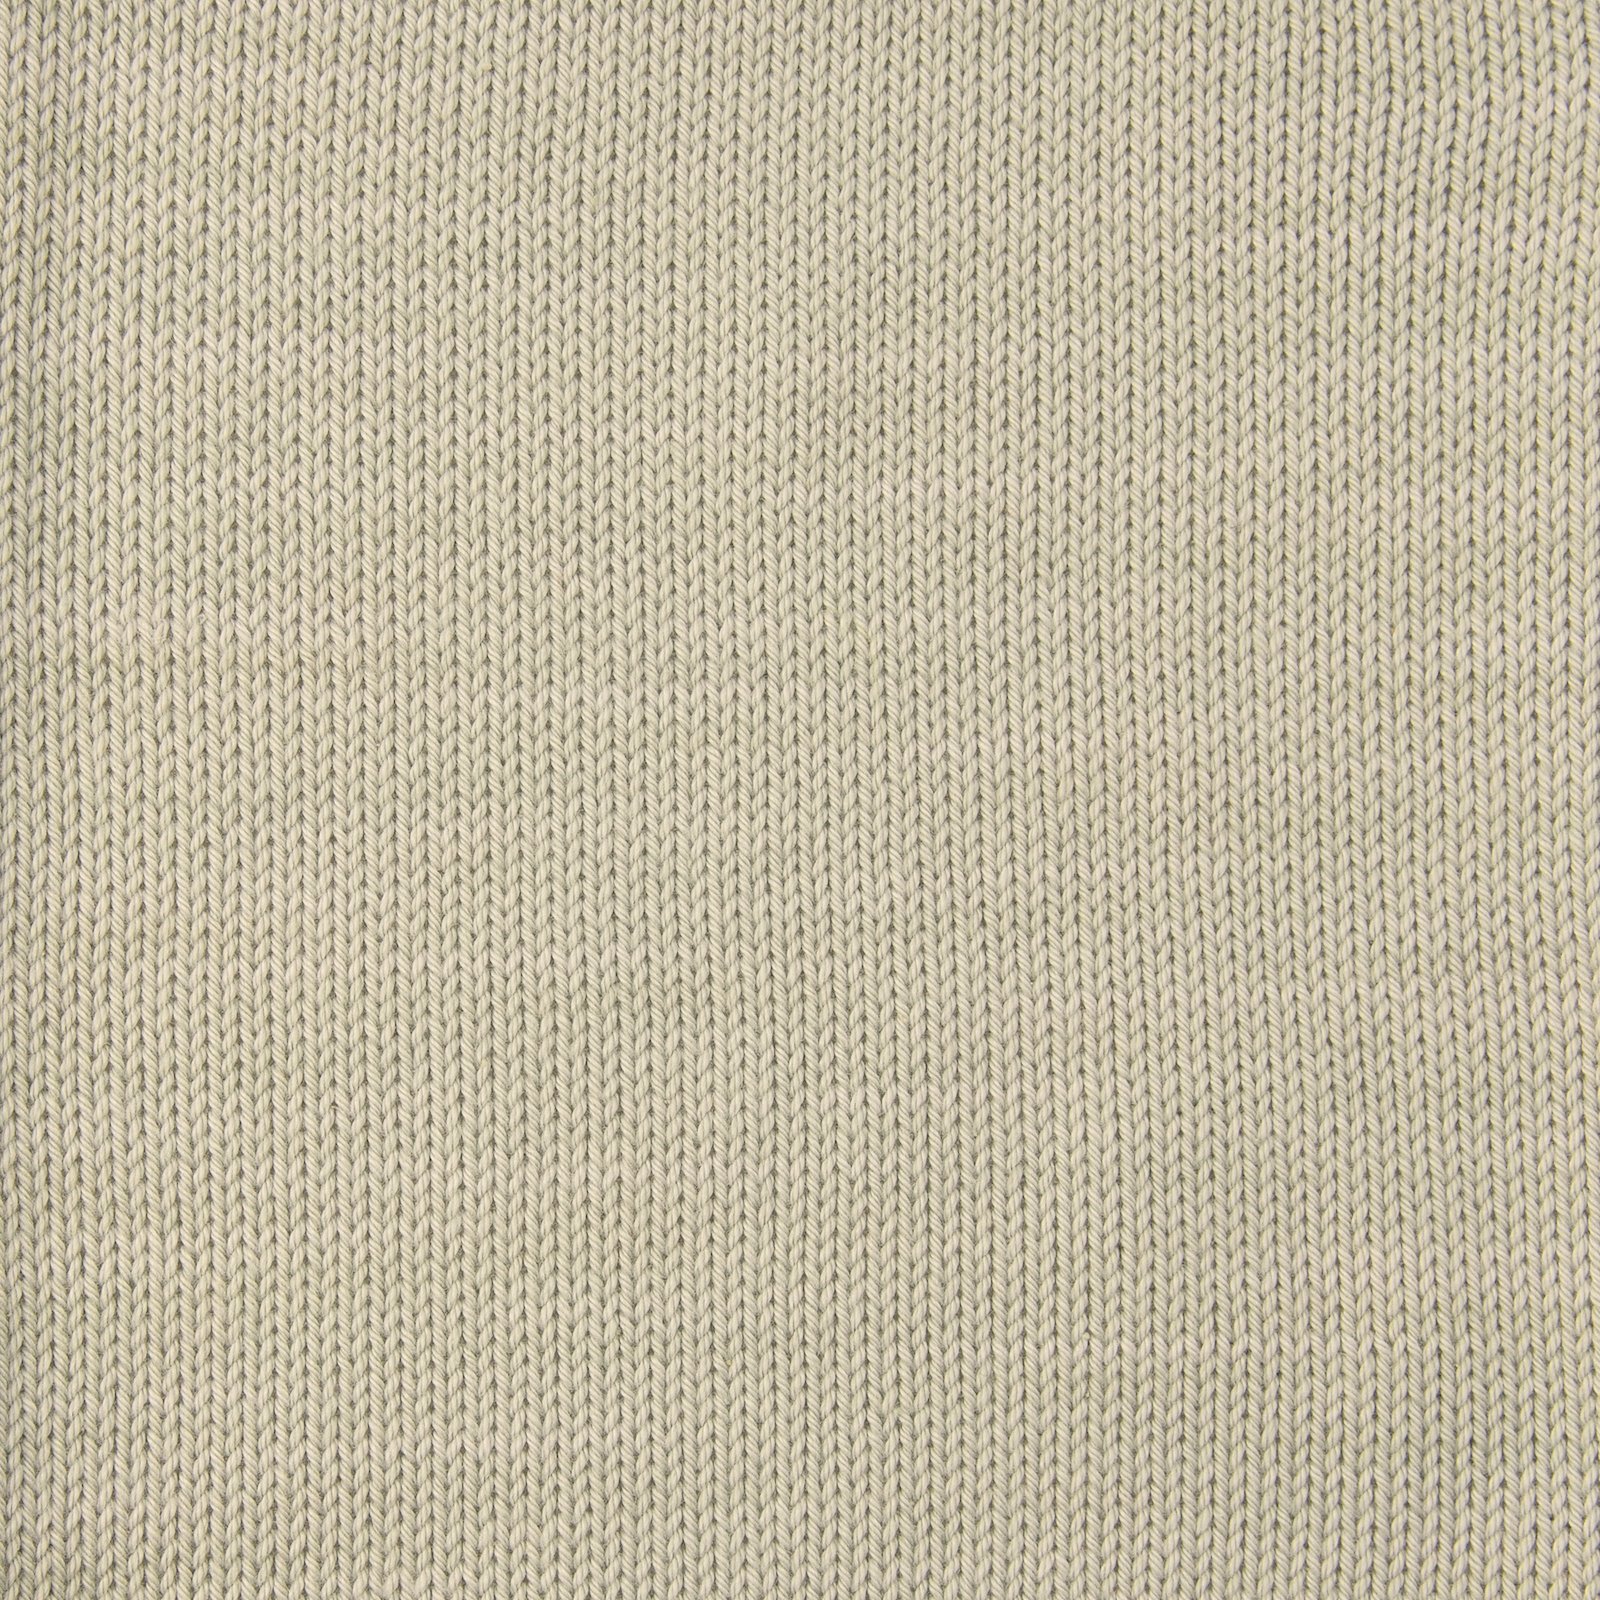 FRAYA, 100% cotton yarn "Colourful", light concrete 90060039_sskit